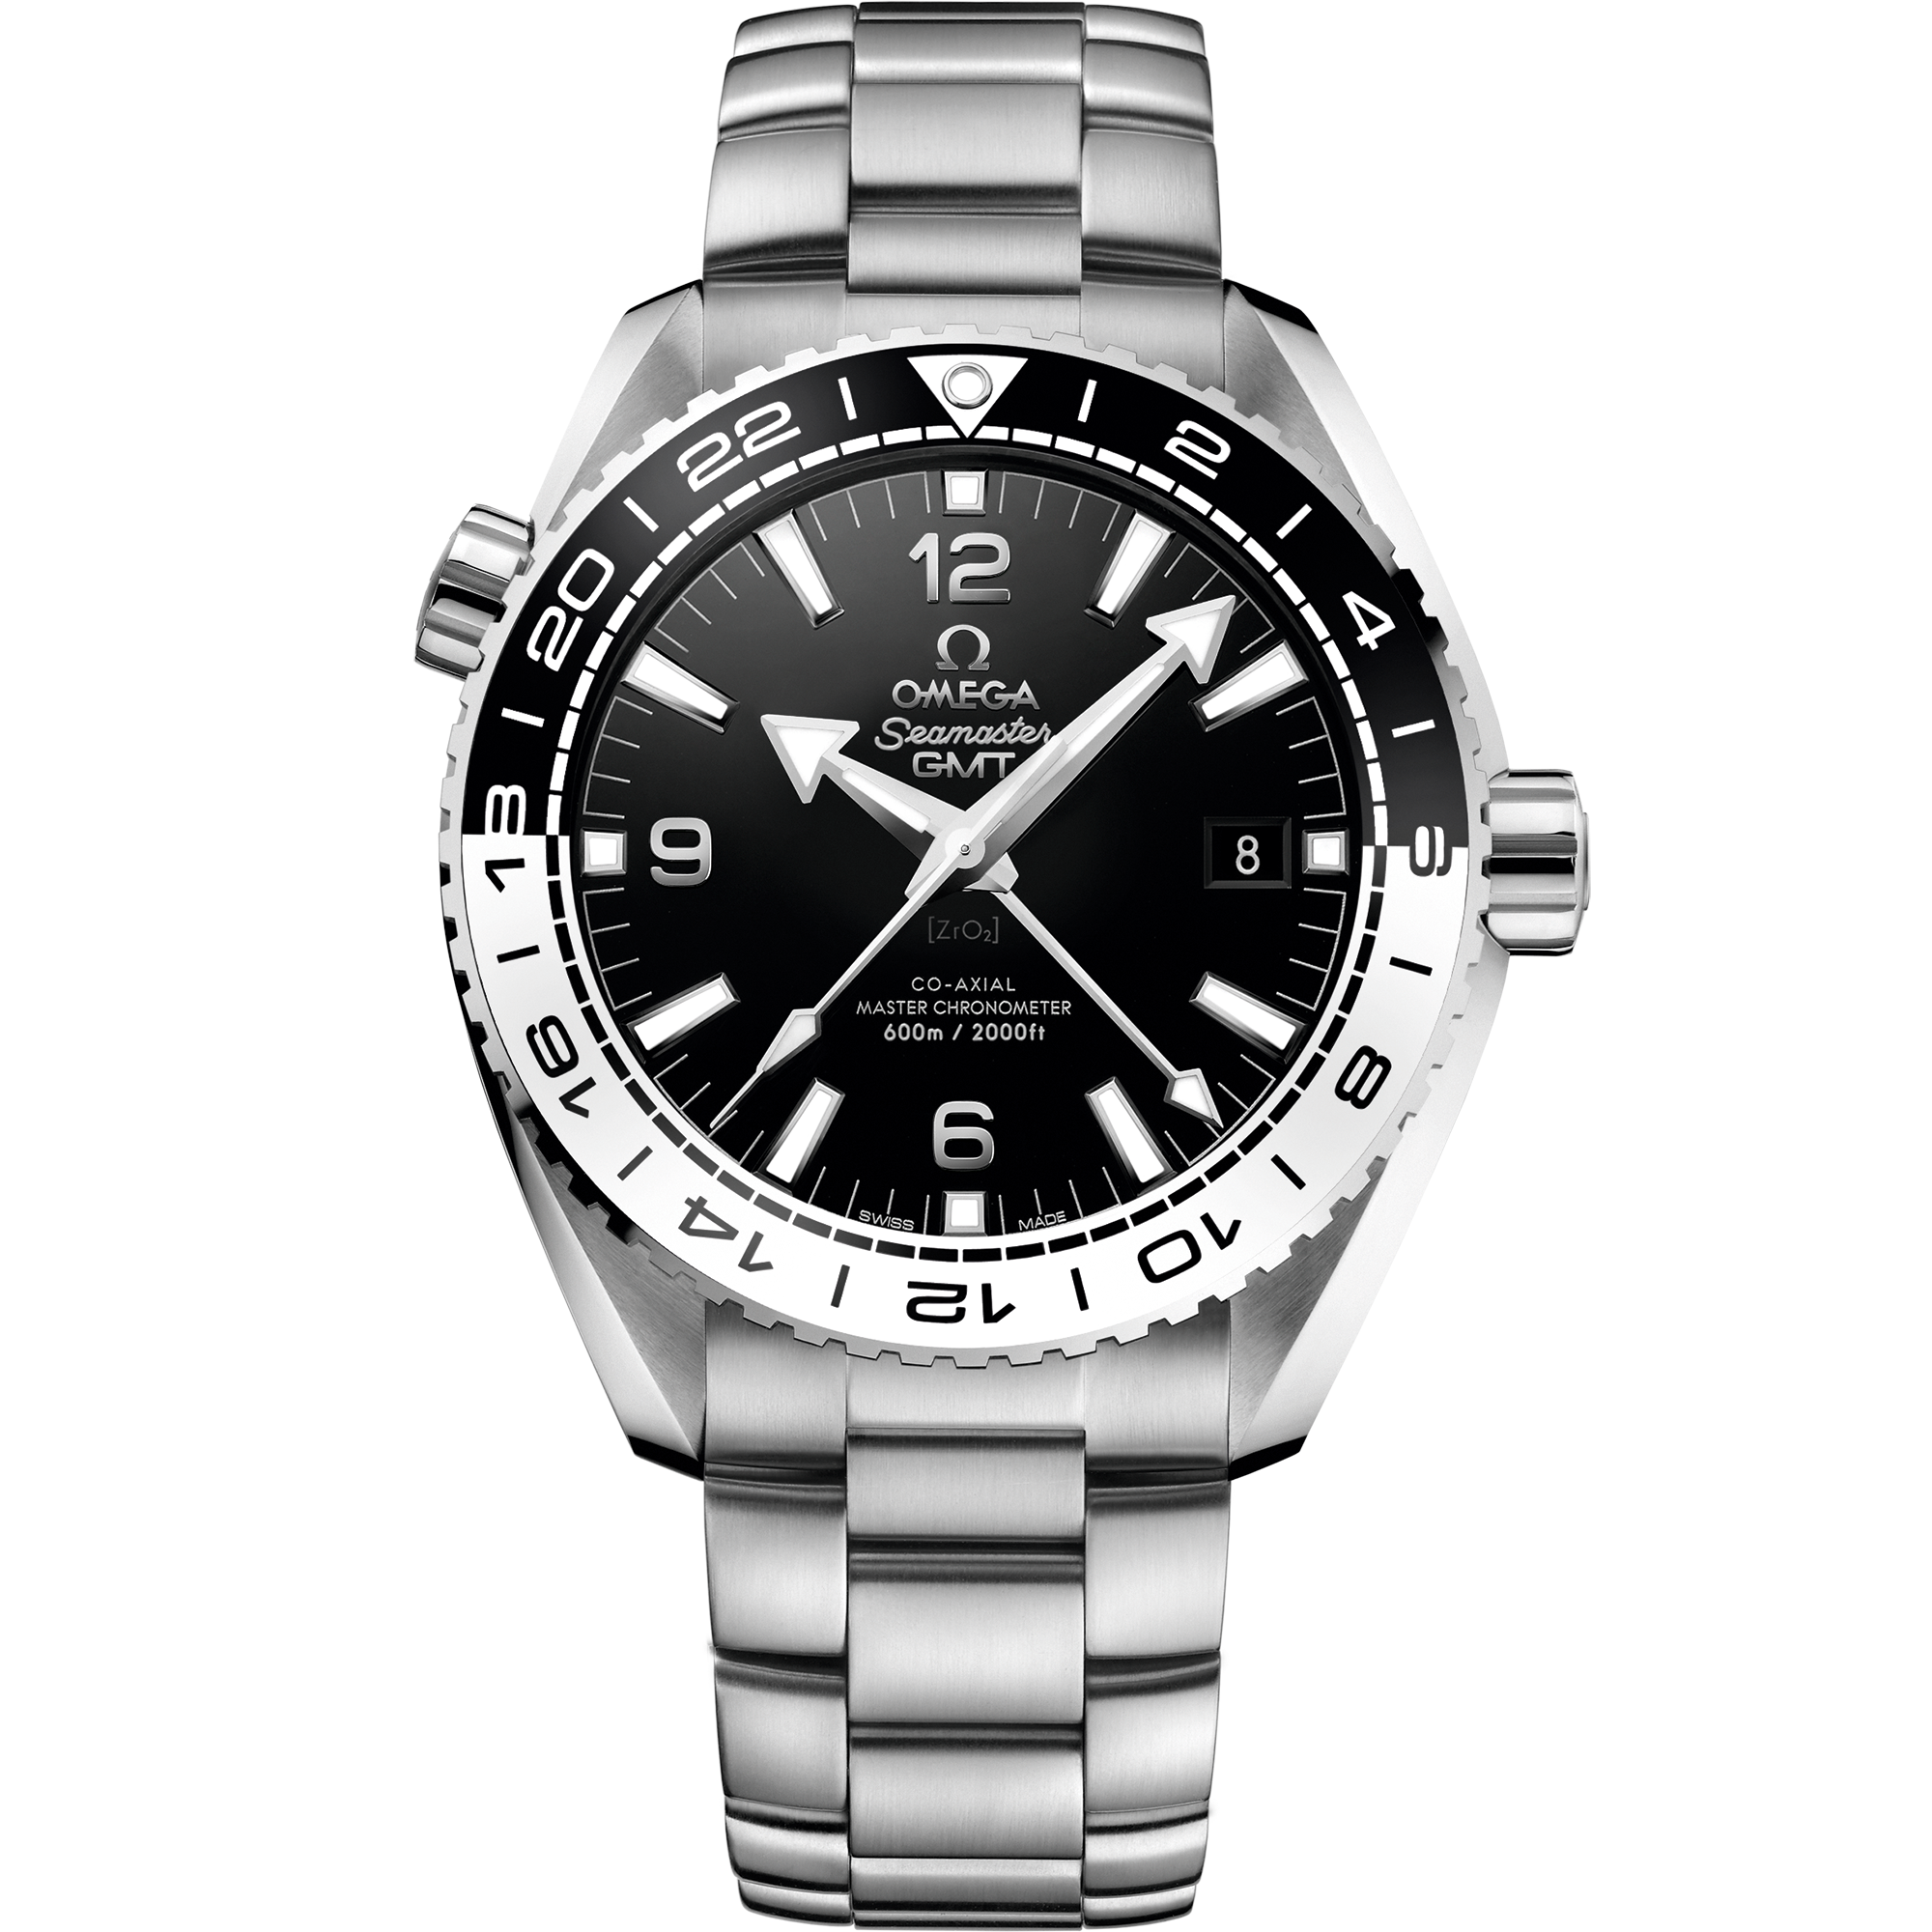 Planet Ocean 600M Seamaster Steel Chronometer Watch 215.33.44.22.01.001 |  OMEGA US®